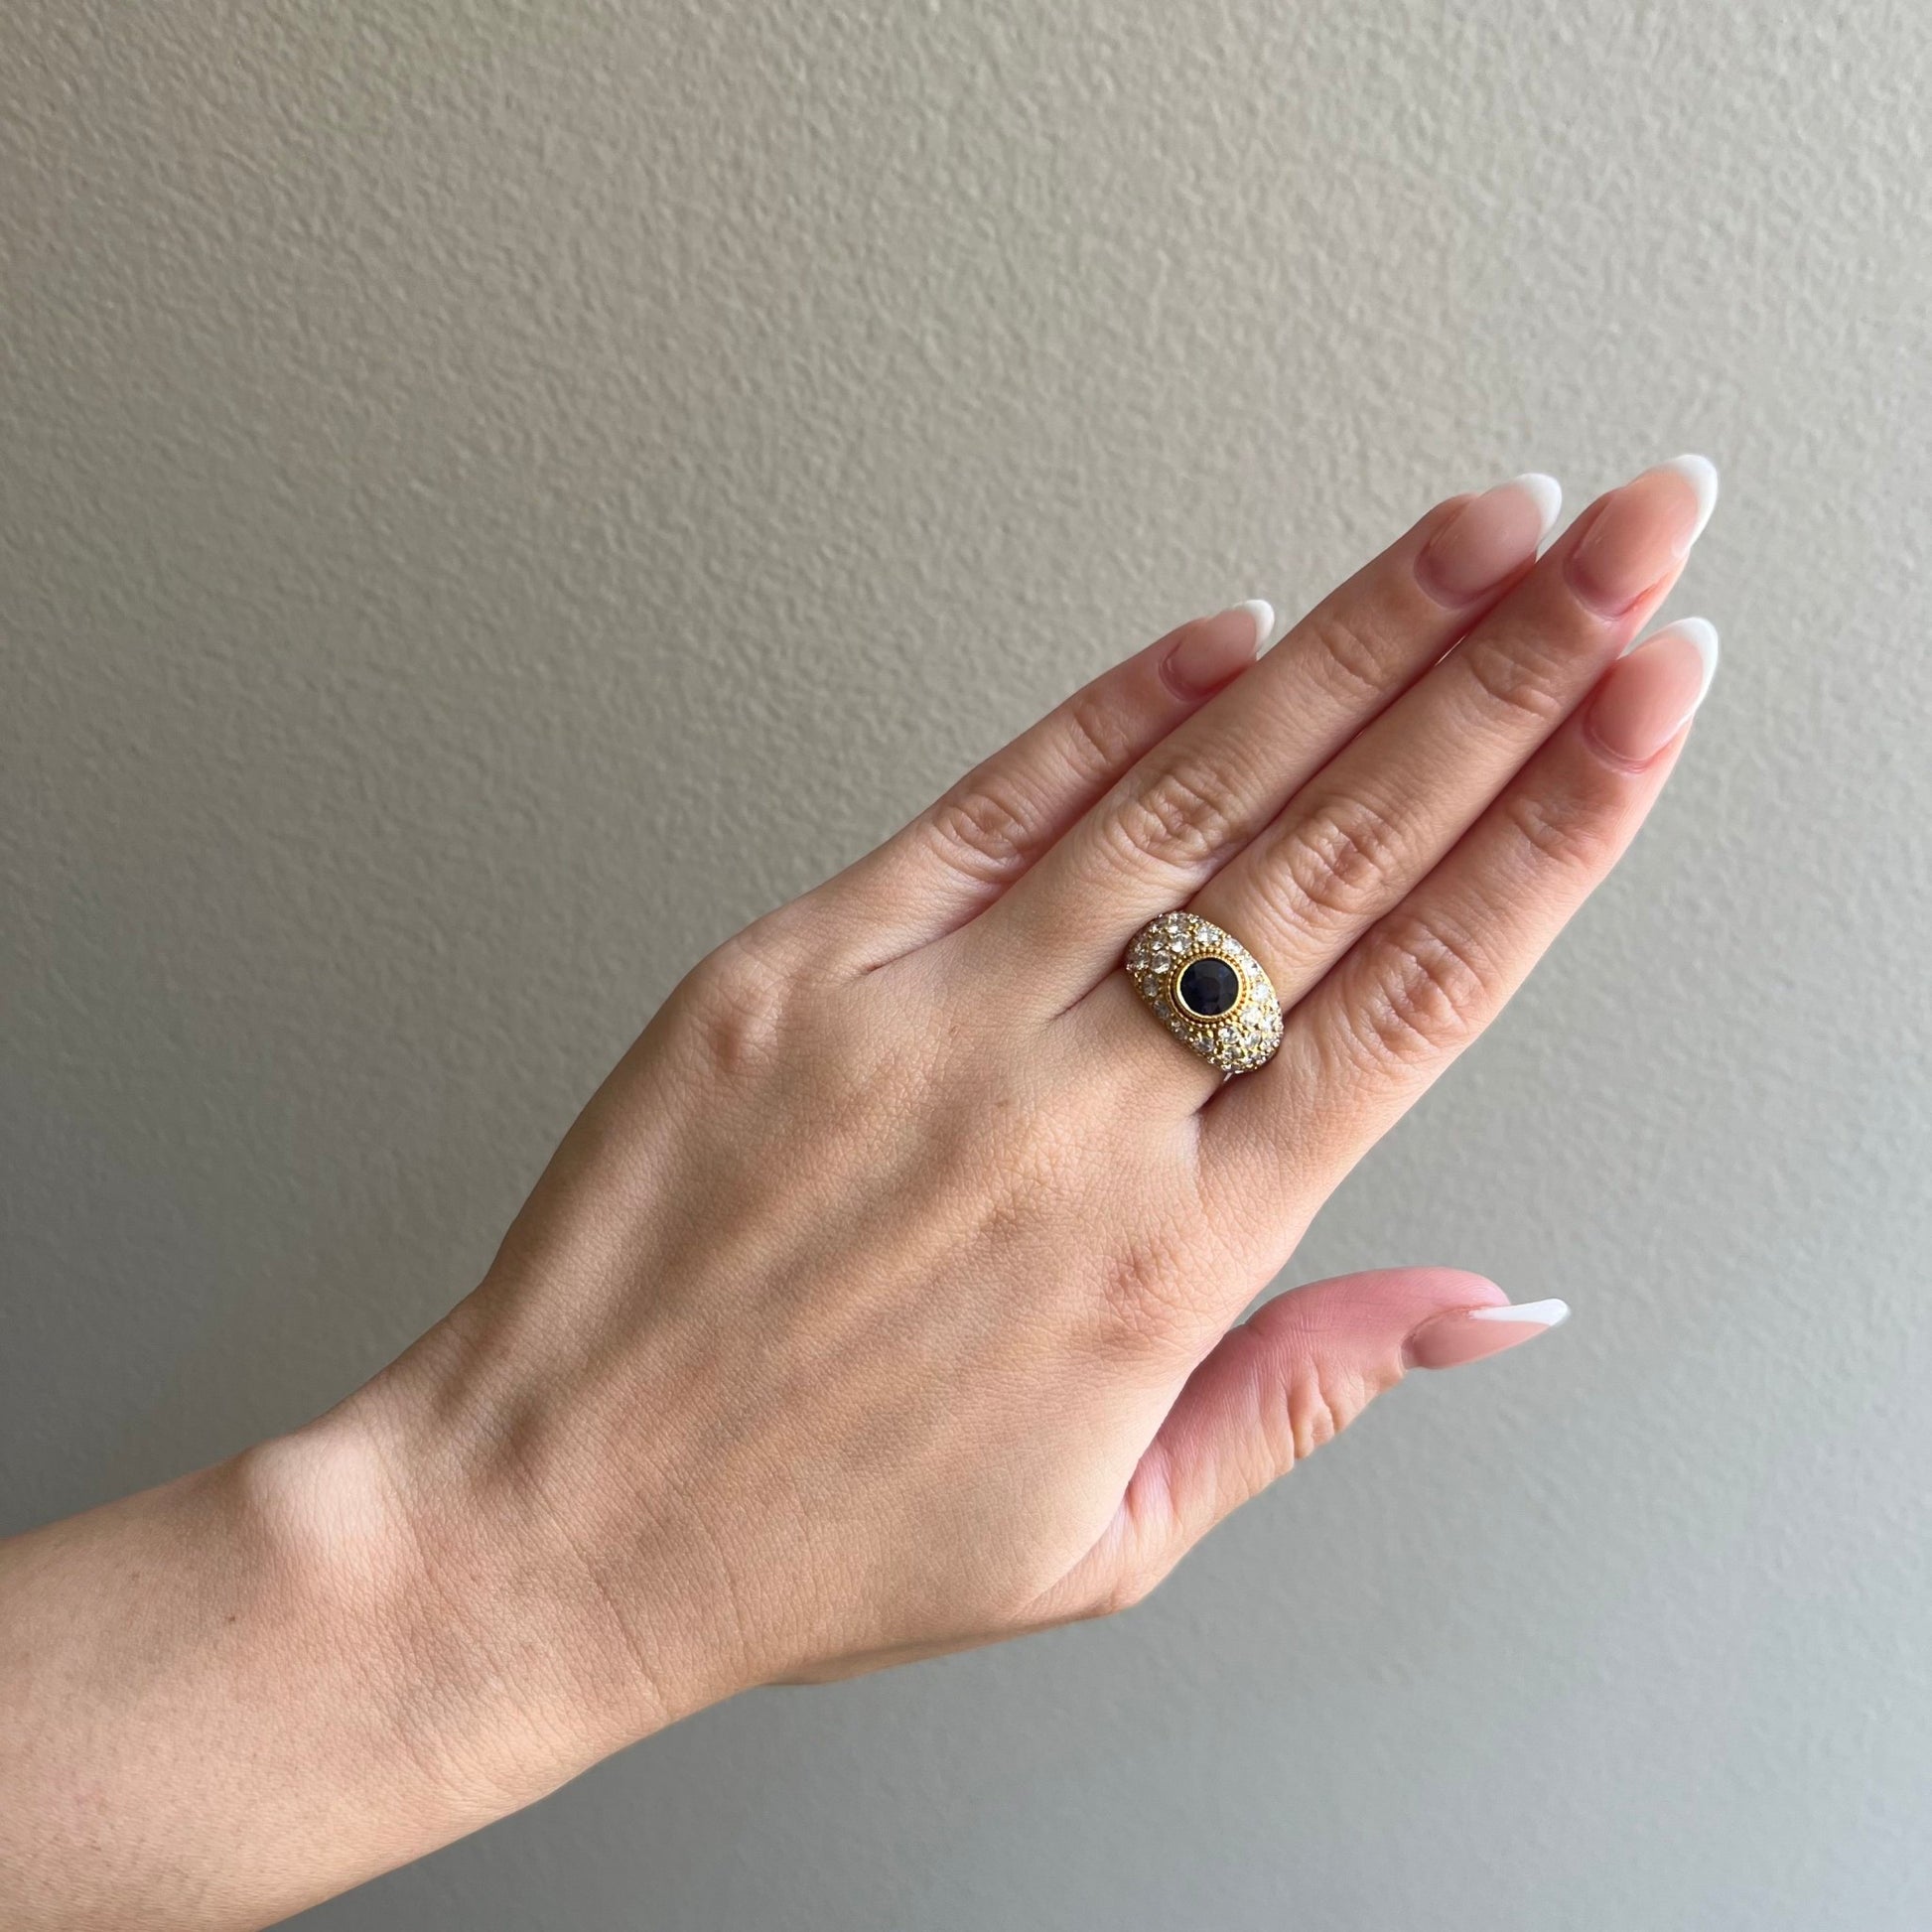 Joseph Marchak 1960s 18KT Yellow Gold Sapphire & Diamond Ring on finger